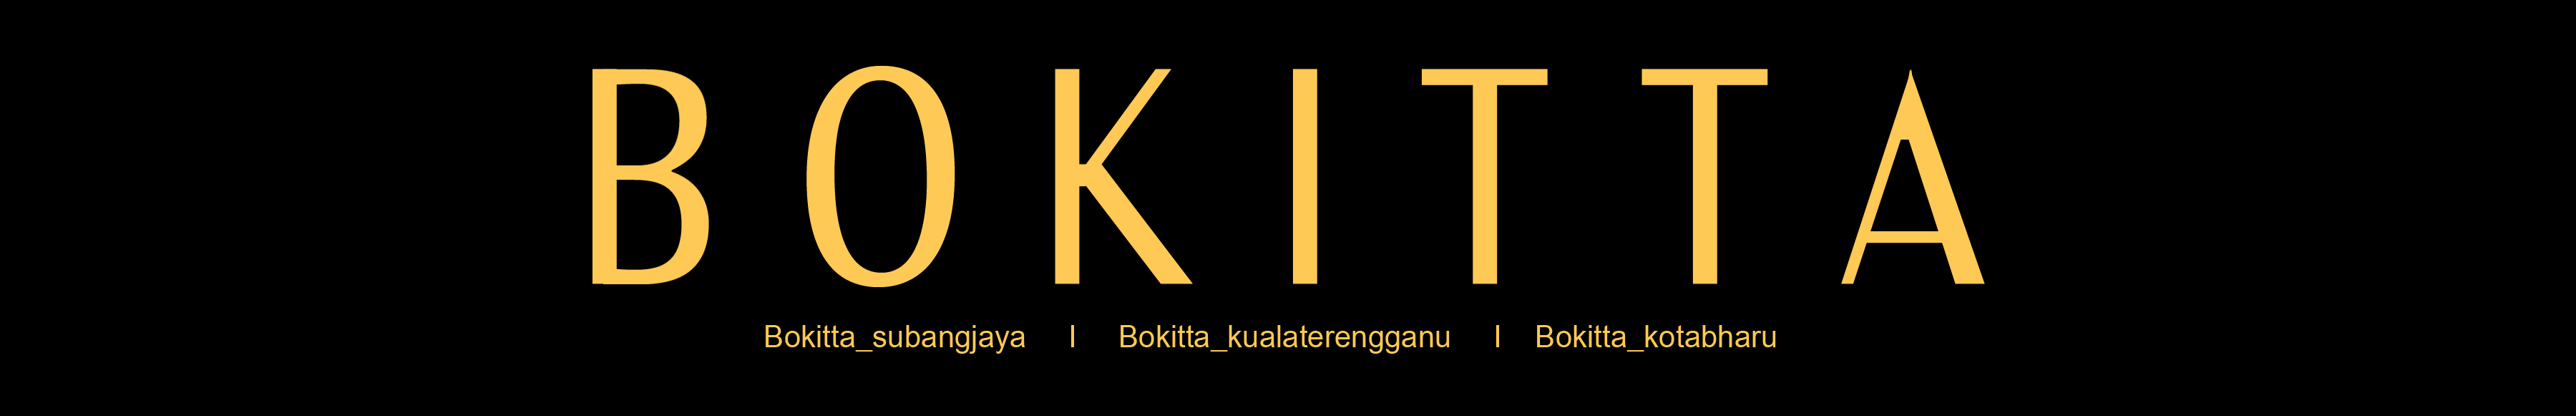 bokitta new logo_2022A